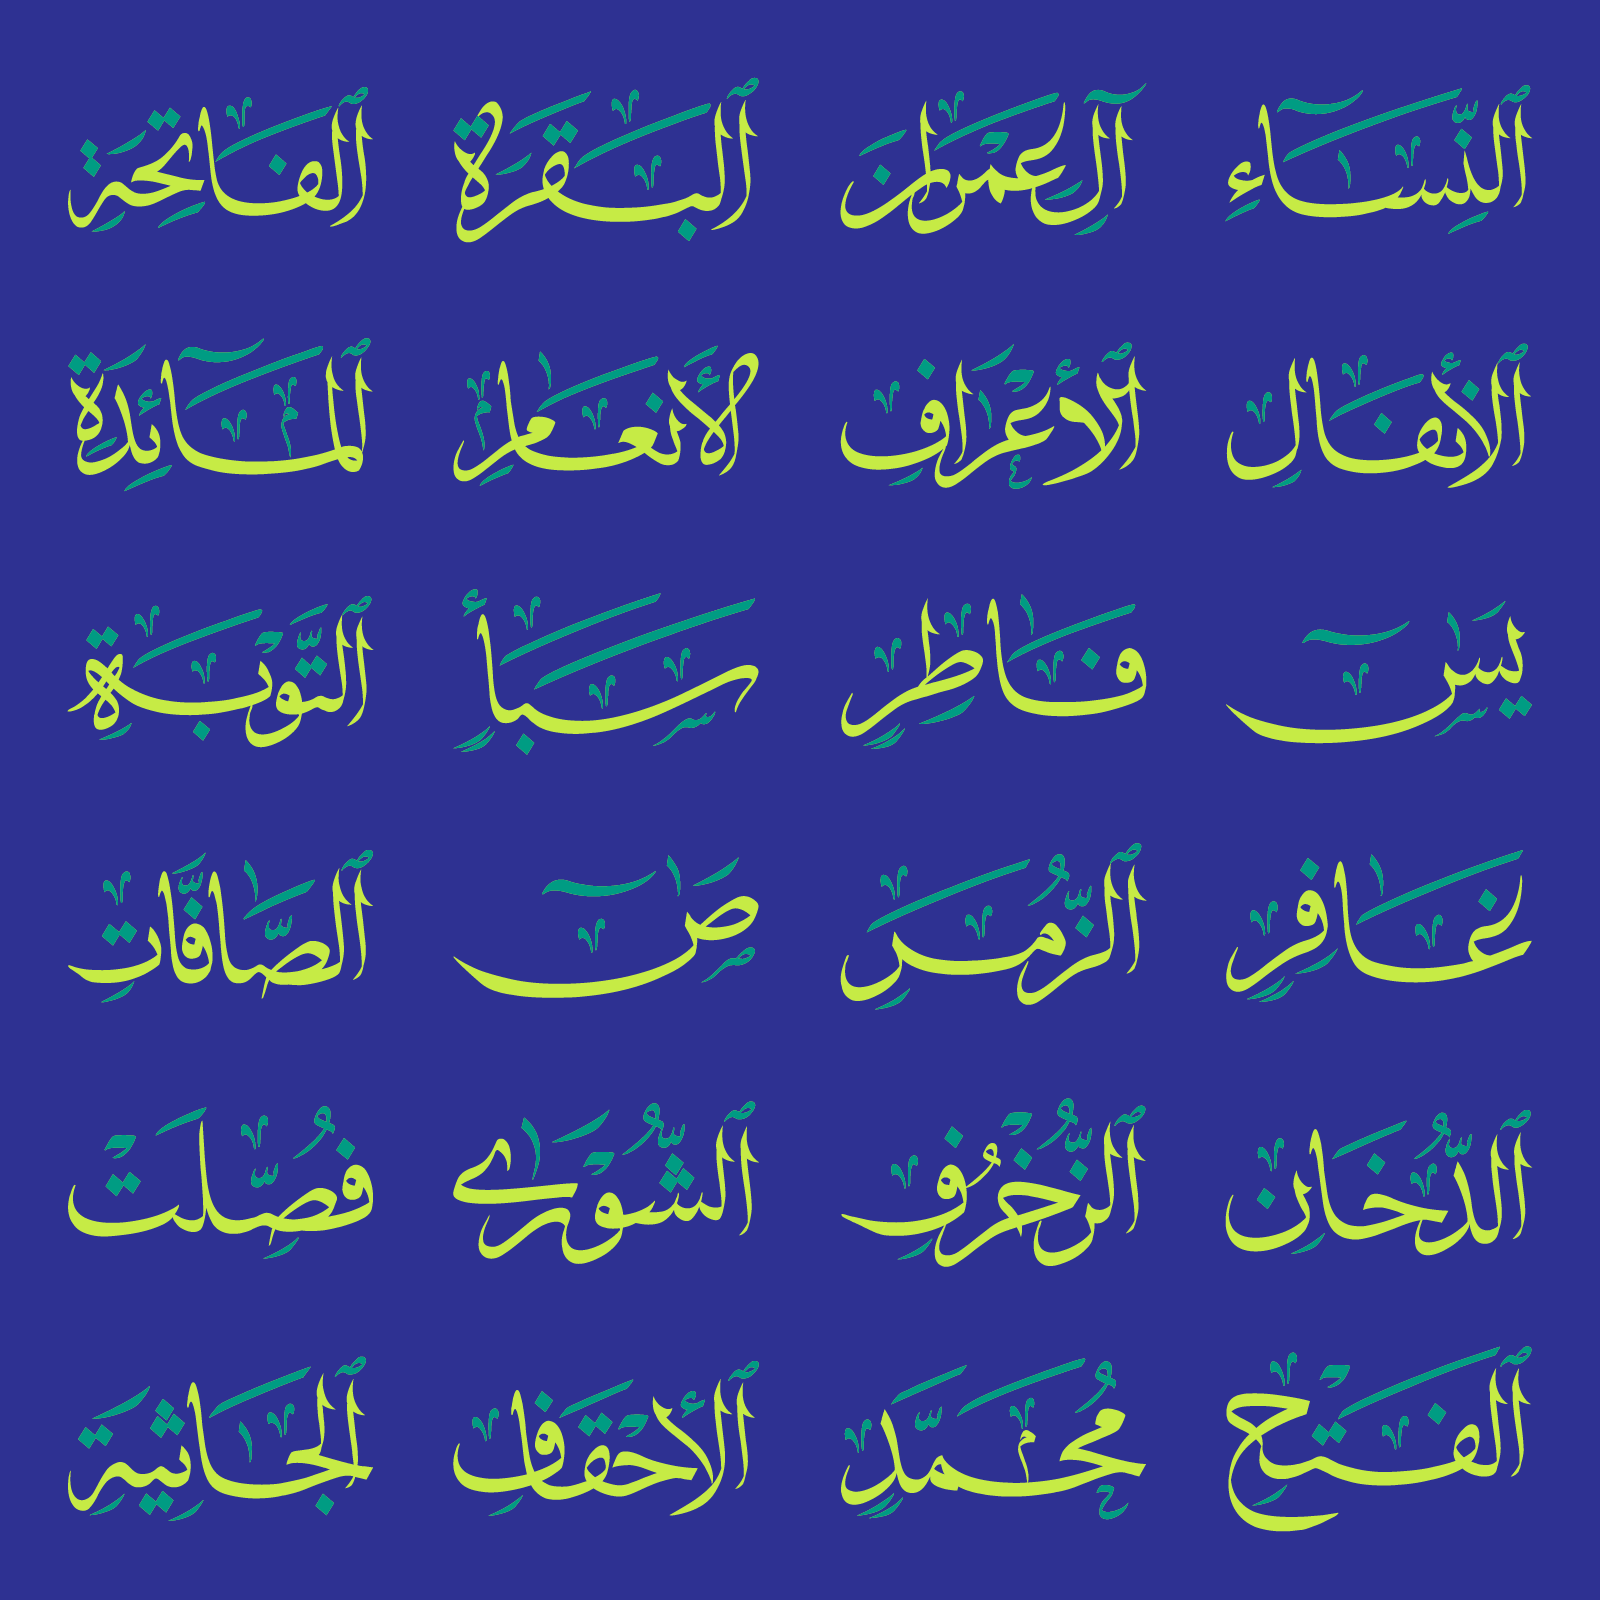 font quran surah 114 color arabic islamic font ttf svg download free #islamic #islam #arabic #type #typegang #arabic #quran #typedesign #font #logo #design #fonts #typedesigner